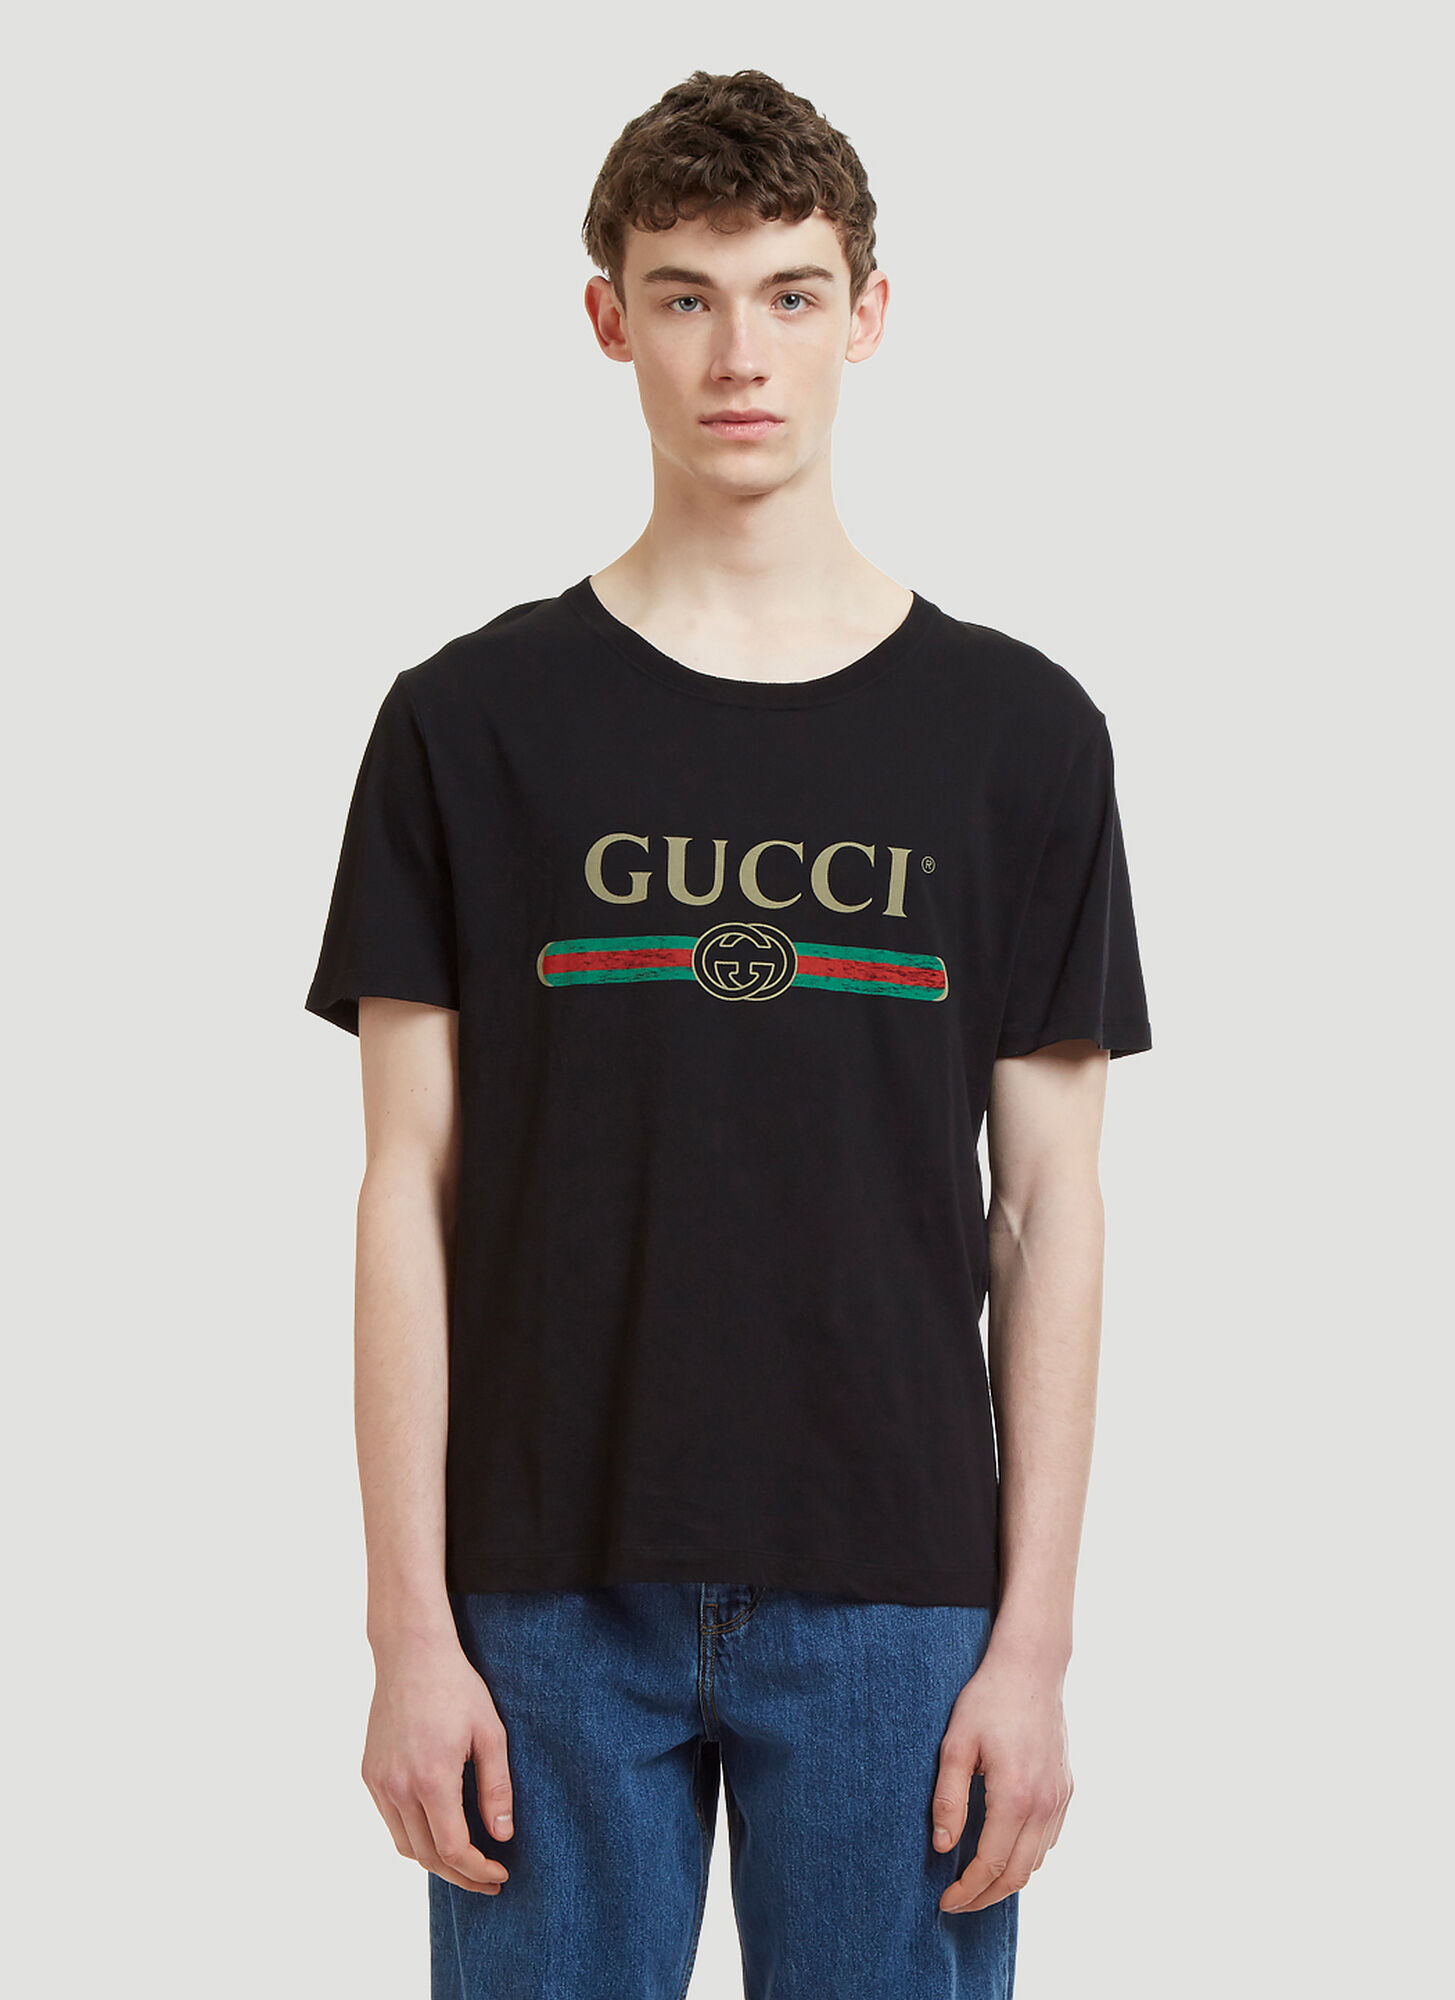 Gucci Logo T-Shirt in Black size M | The Fashionisto